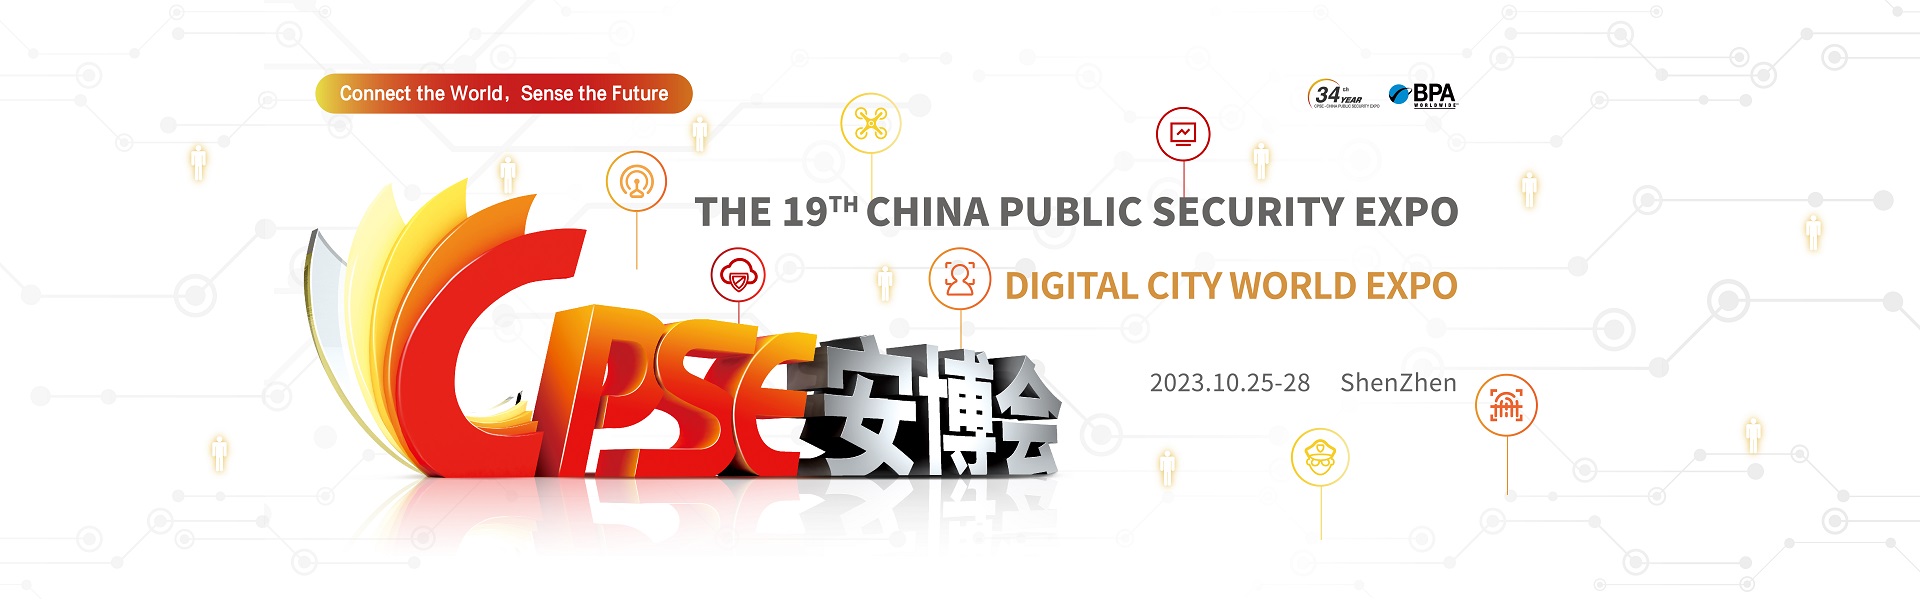 El 19º CPSE en Shenzhen del 2 al 28 de octubre de 2023